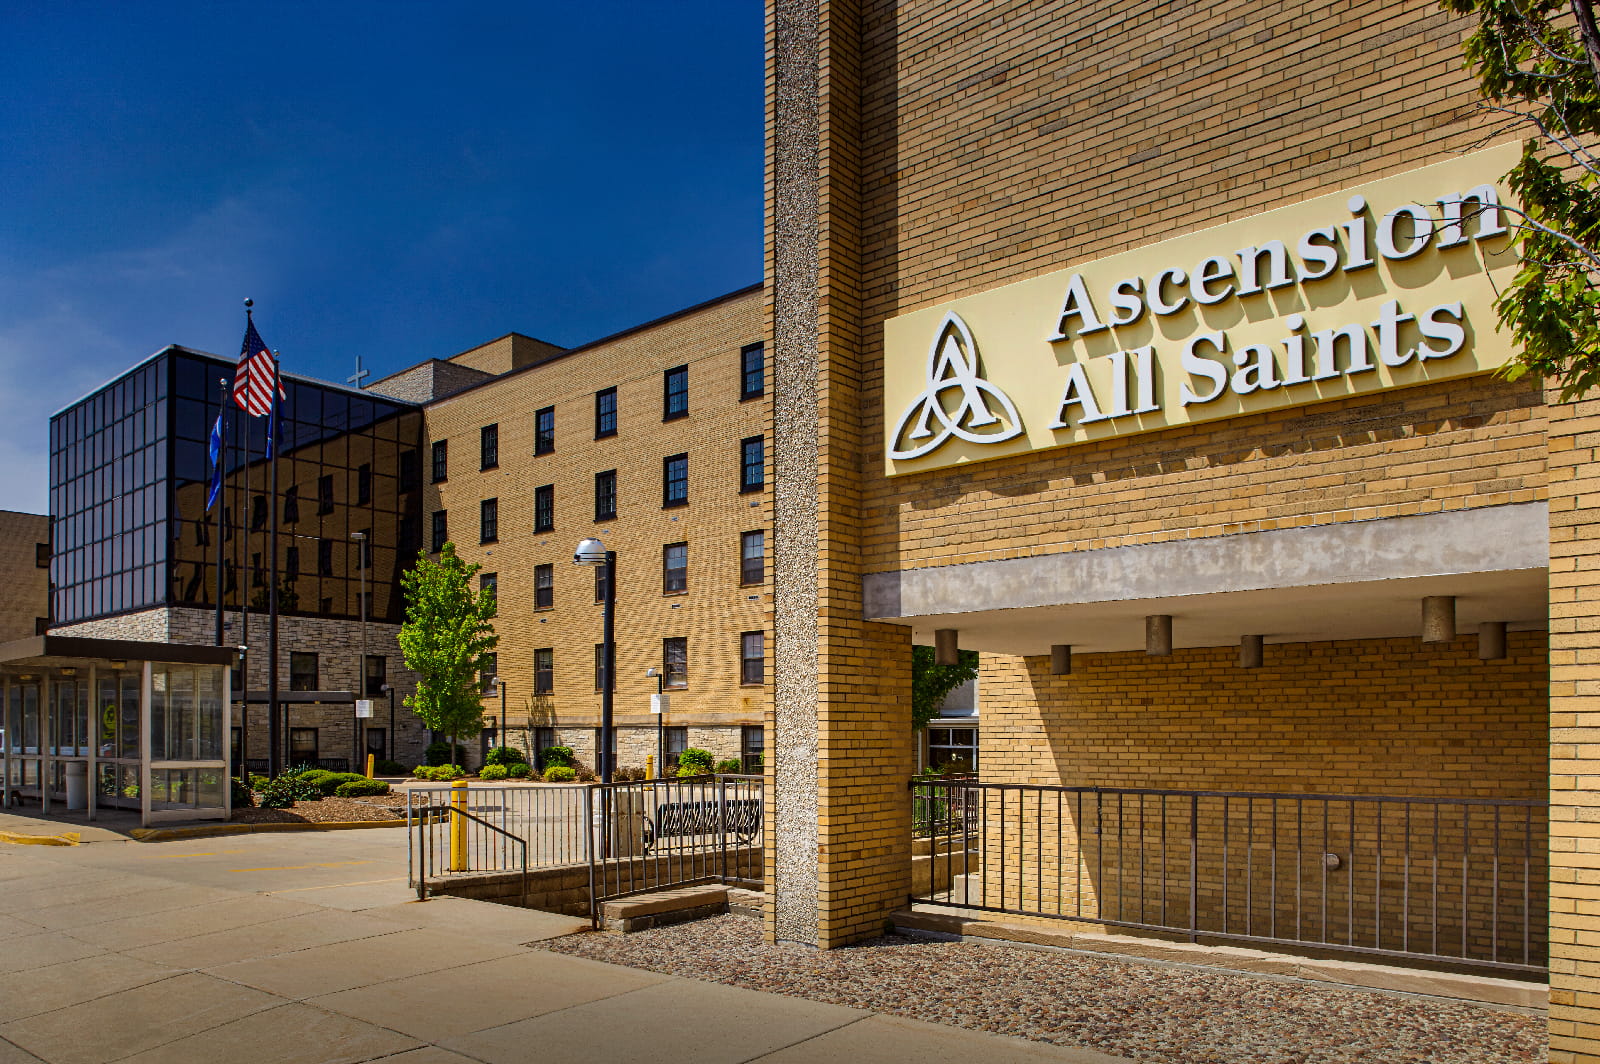 Ascension All Saints - Wisconsin Avenue